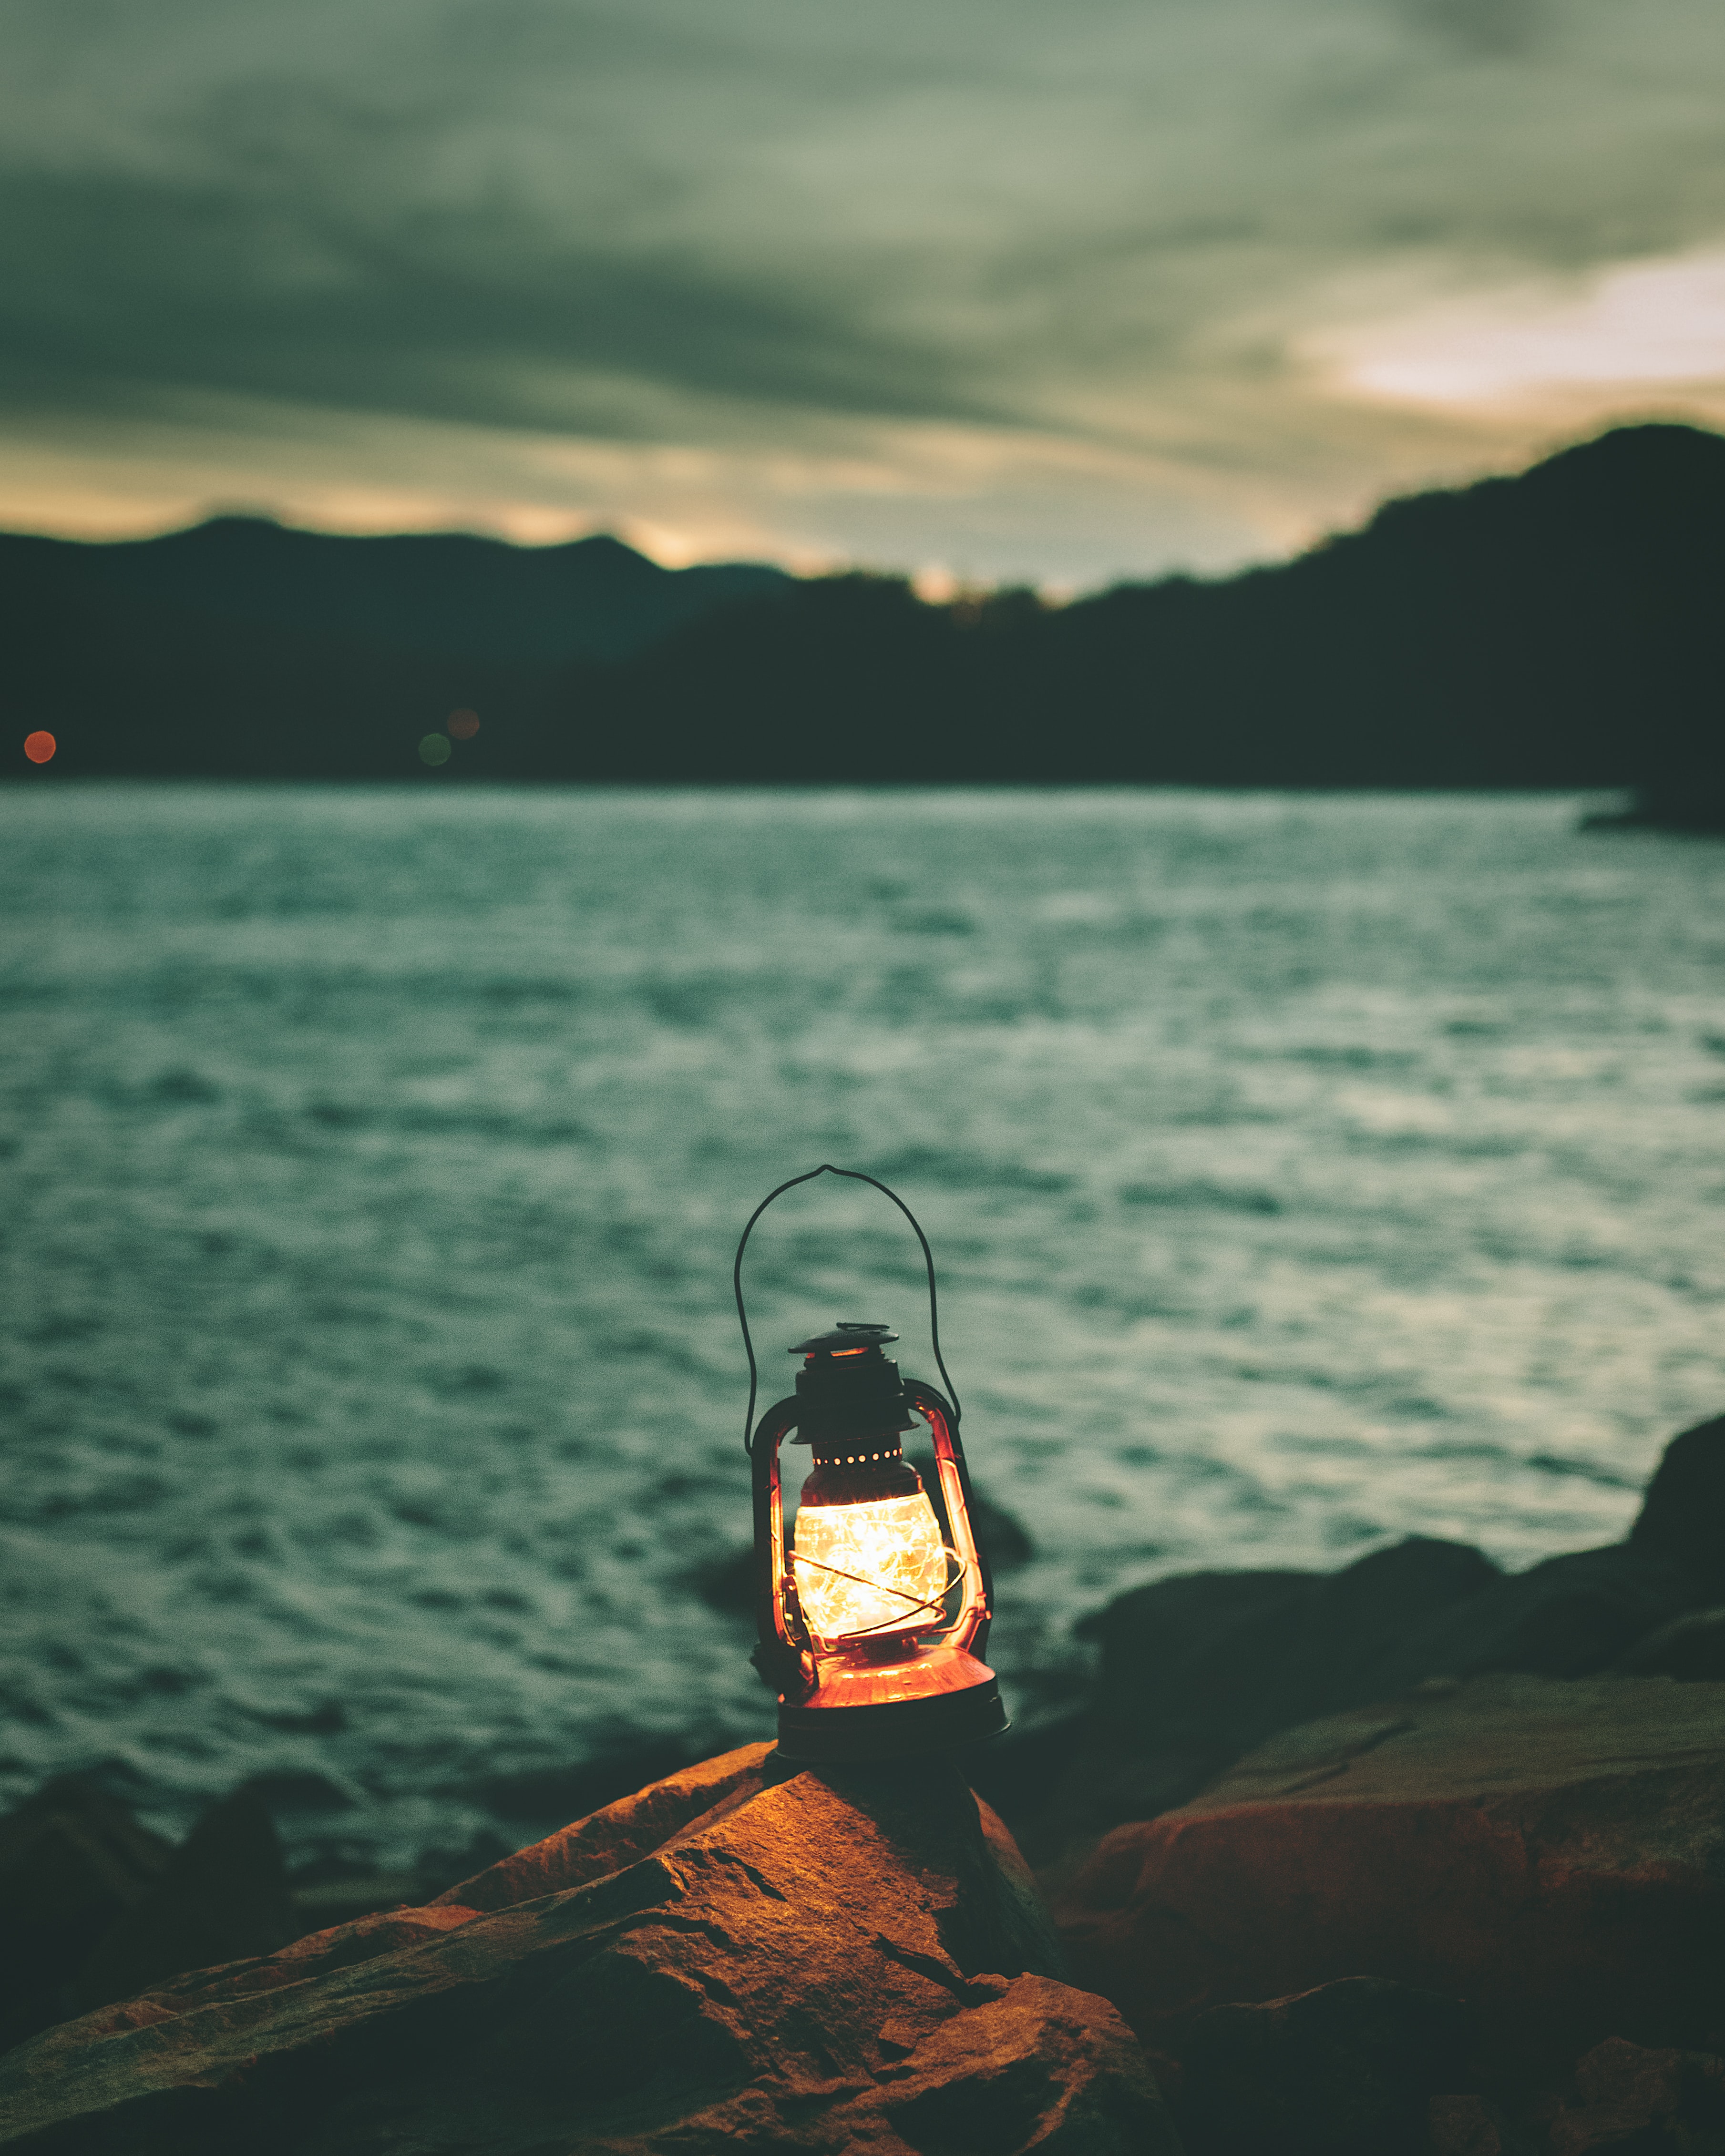 garland, lamp, stones, shore, bank, shine, light, miscellanea, miscellaneous, lantern Free Stock Photo